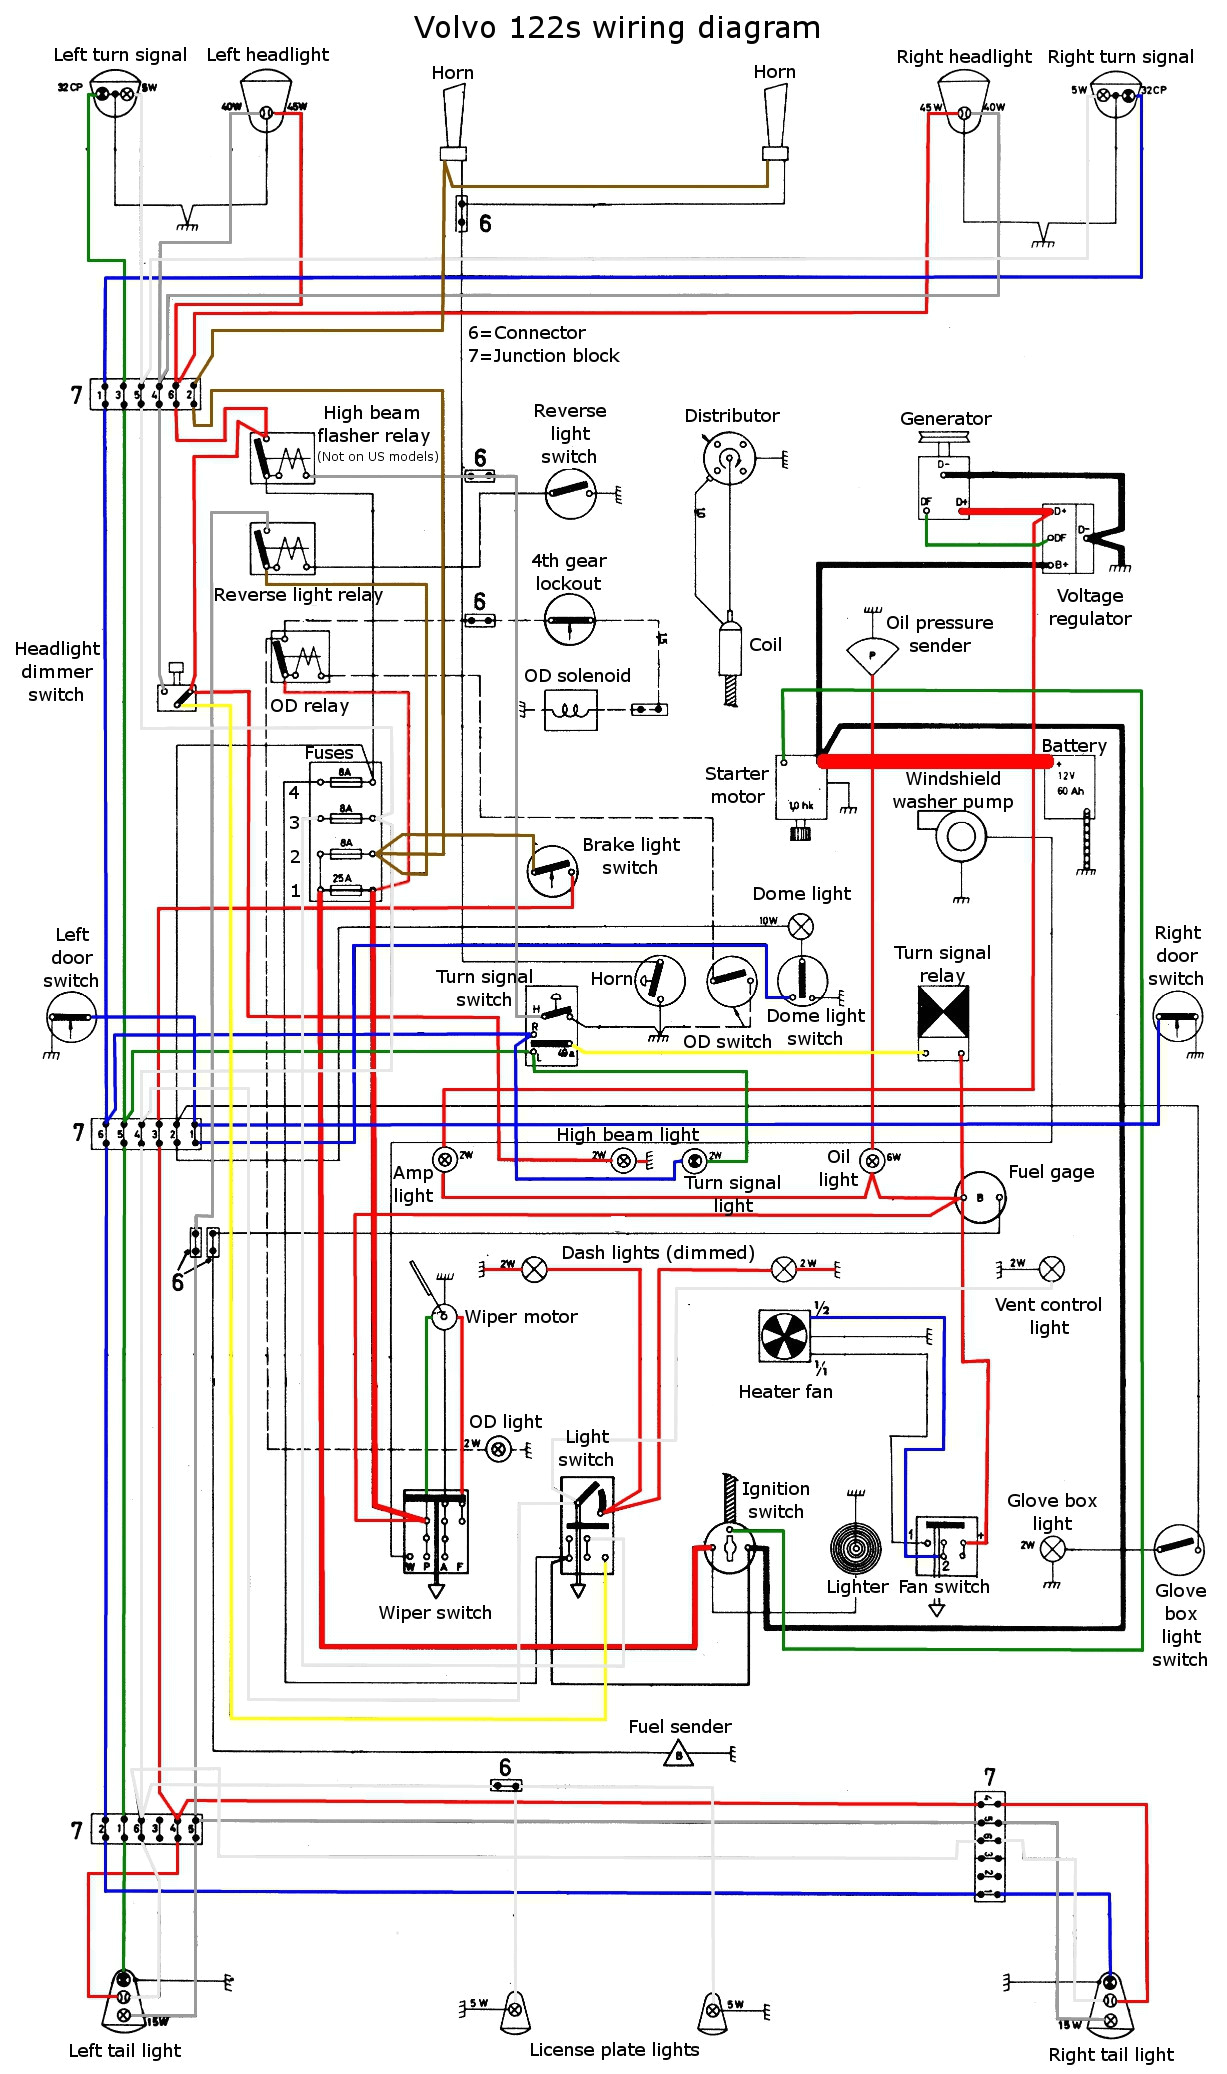 volvo wiring diagram s40 wiring diagram show volvo s40 wiring diagram download